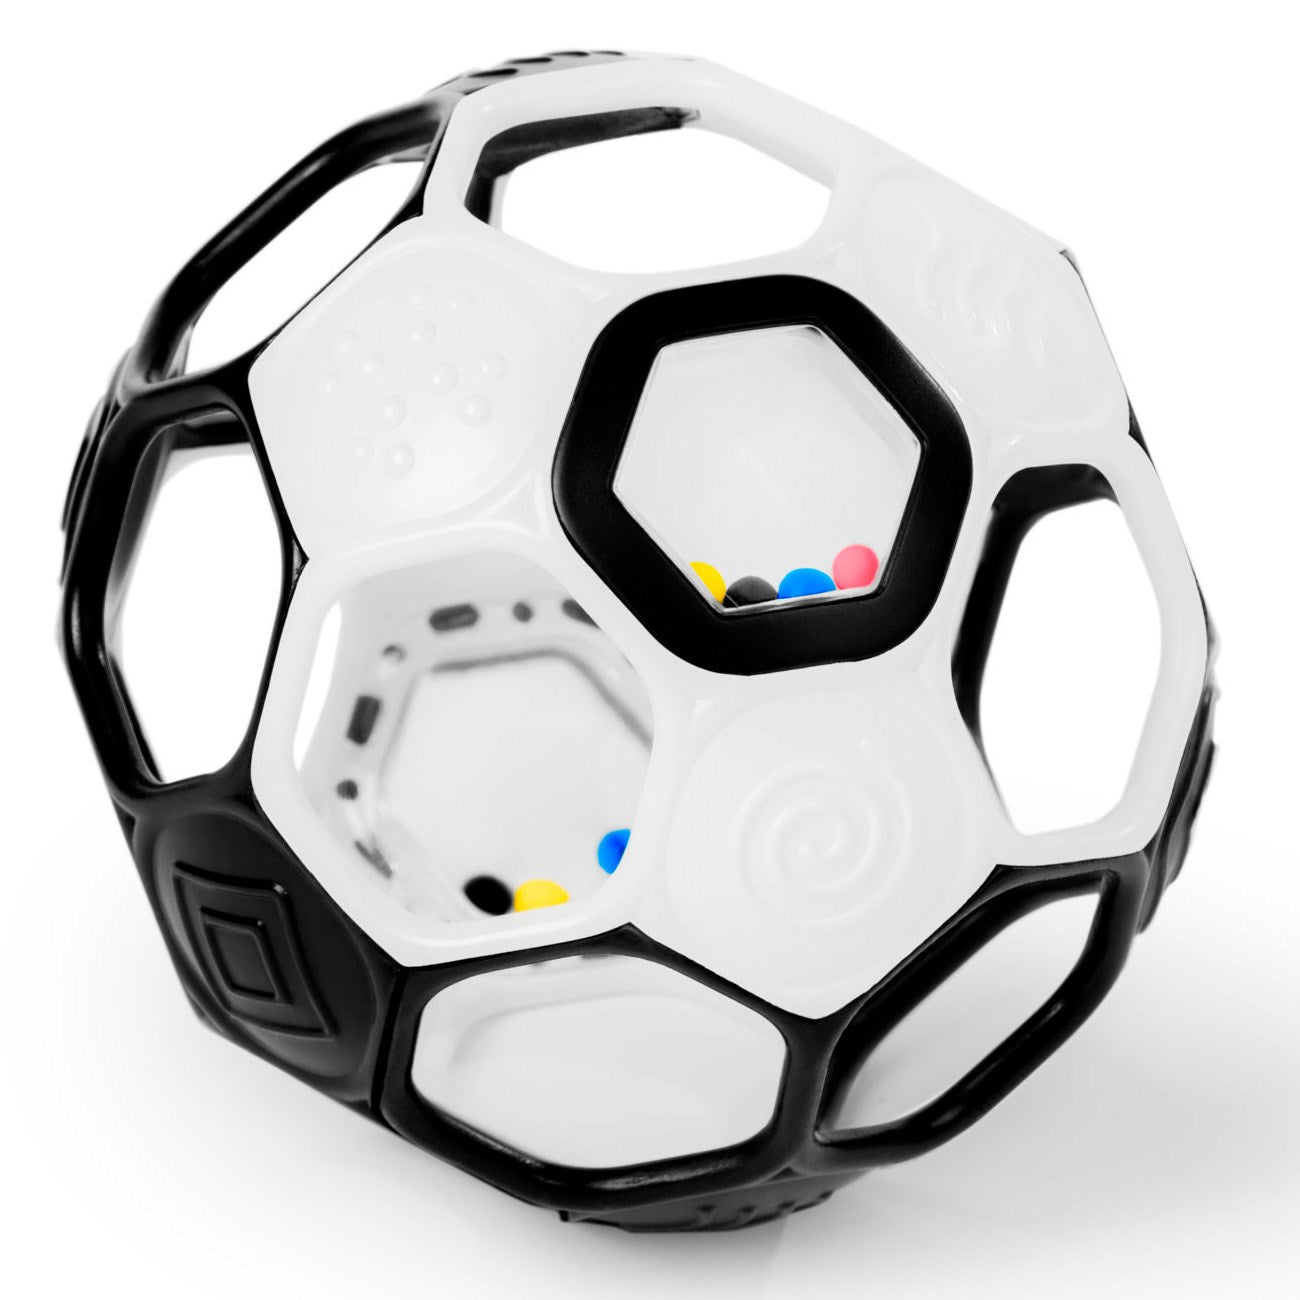 Oball Soccer Football (B&W)